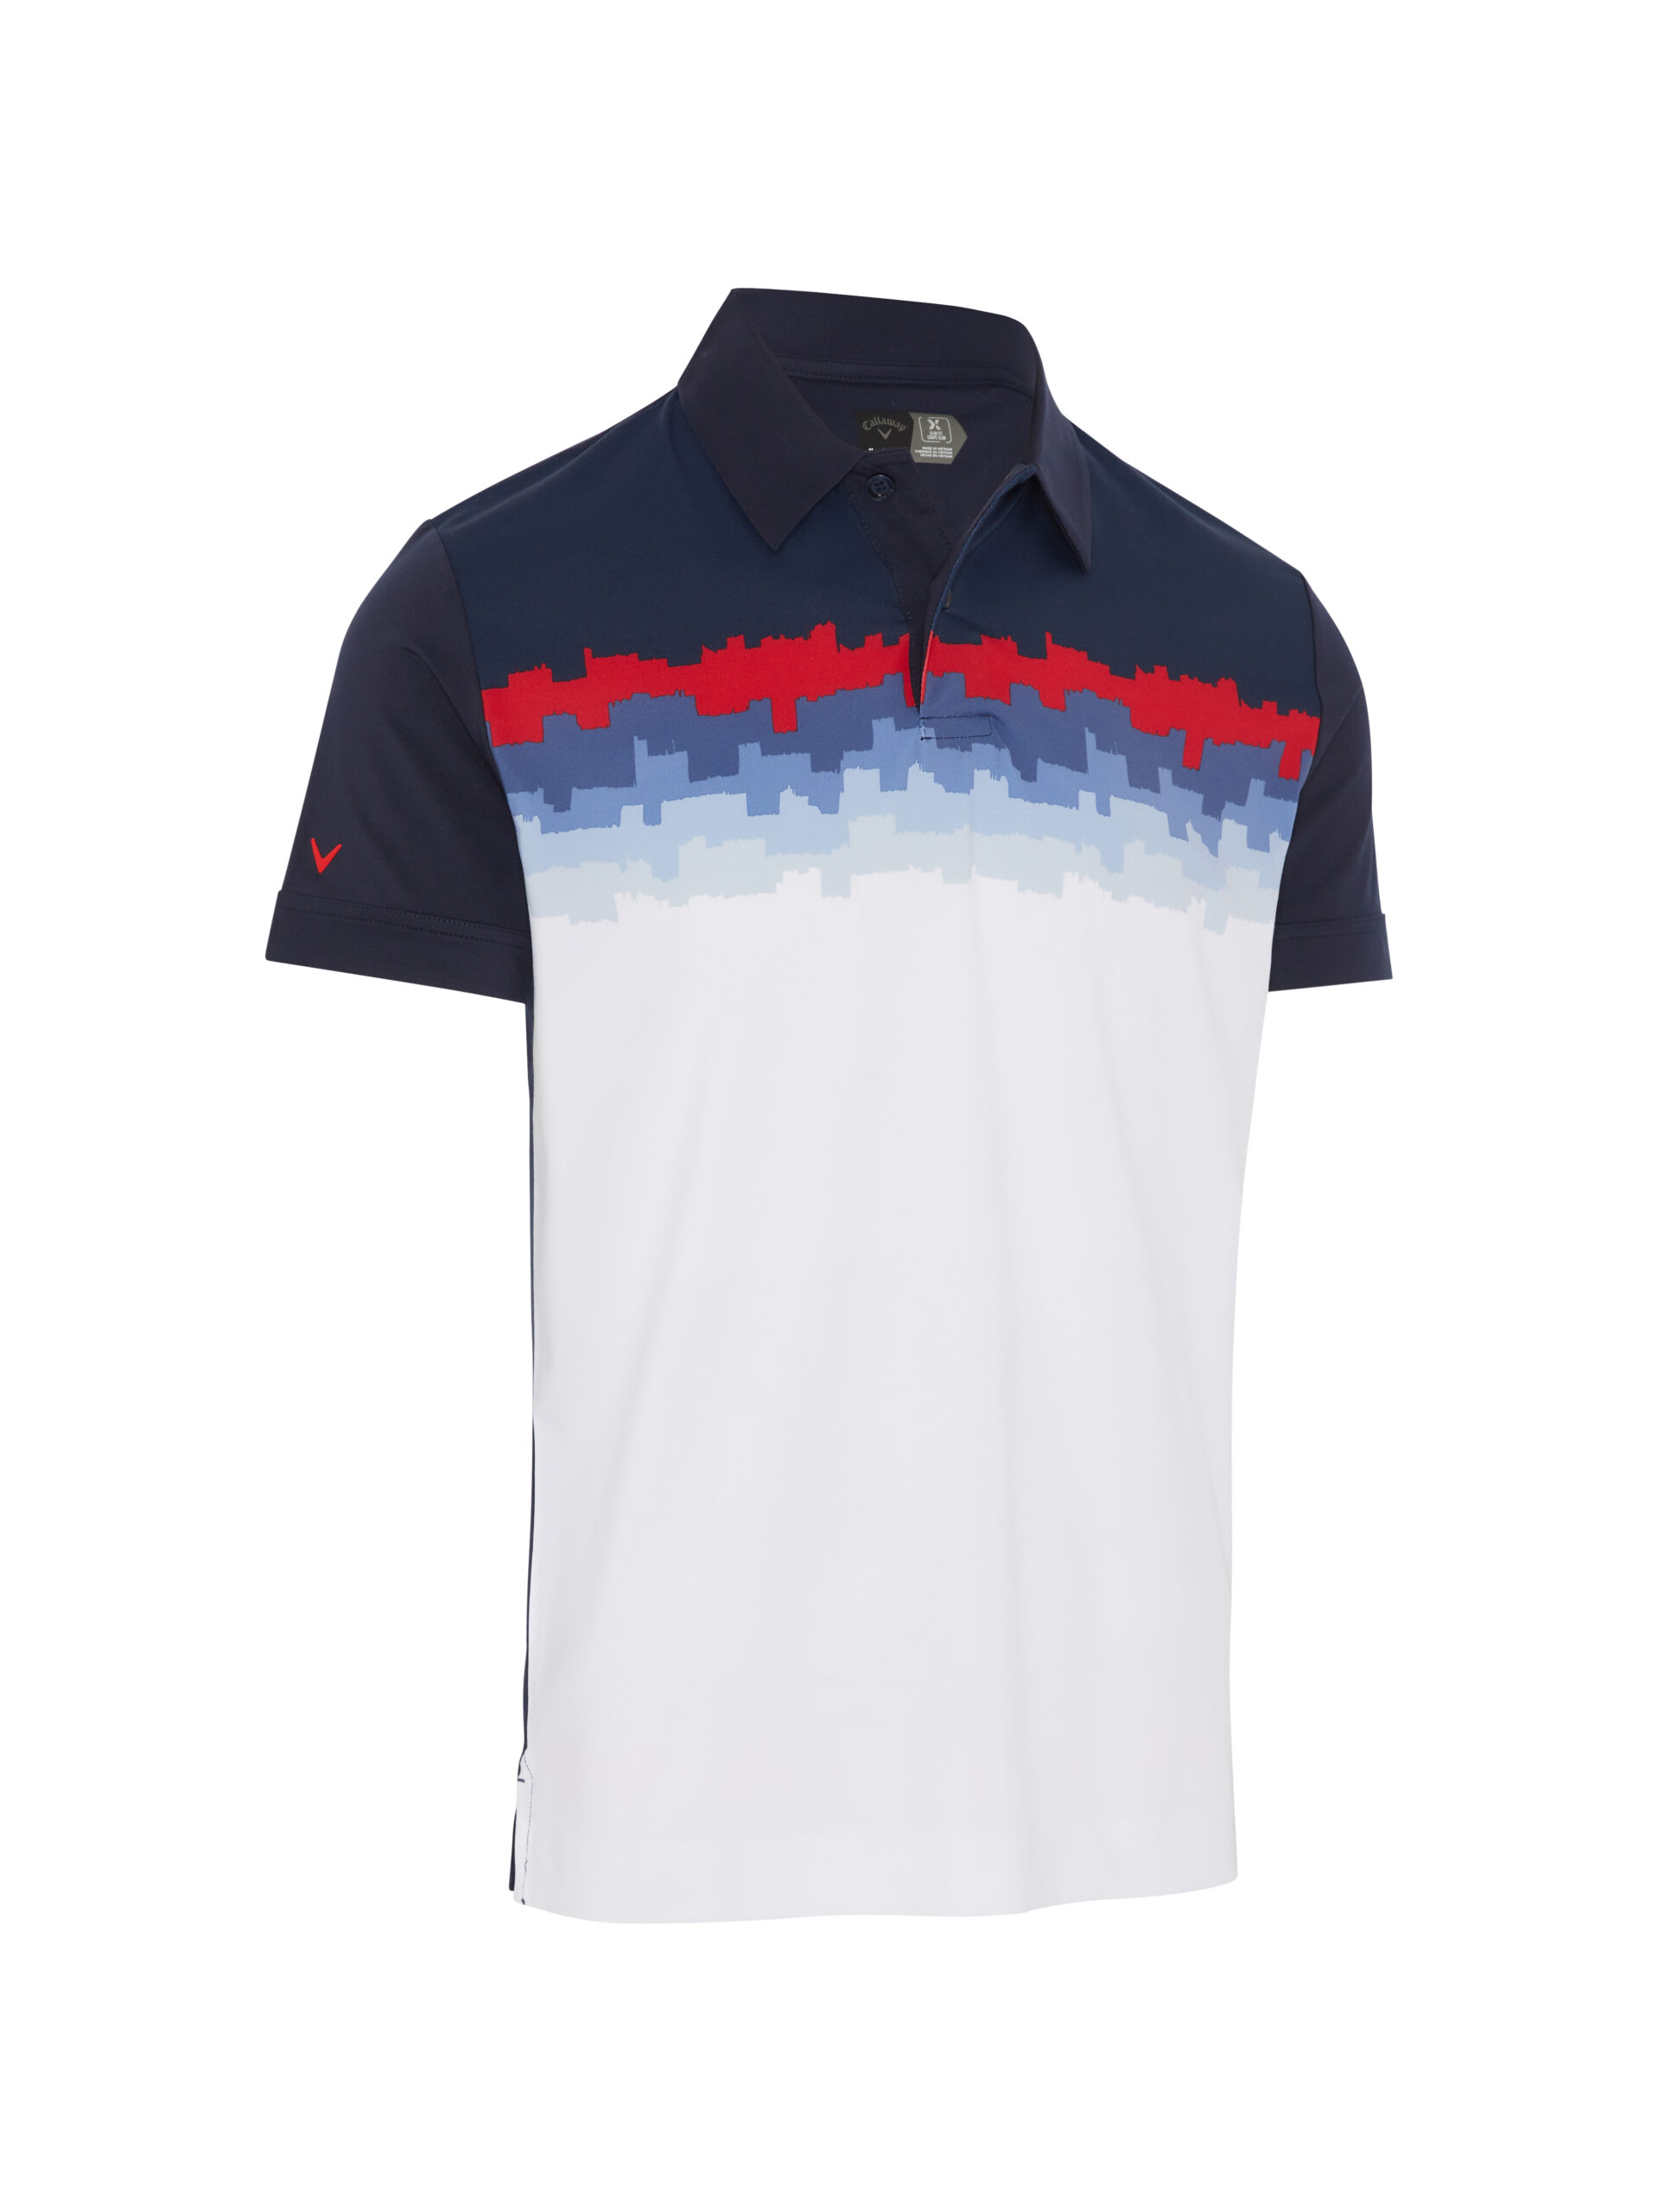 Callaway Skyline Block Print pánské golfové triko, tmavě modré/bílé, vel. XL